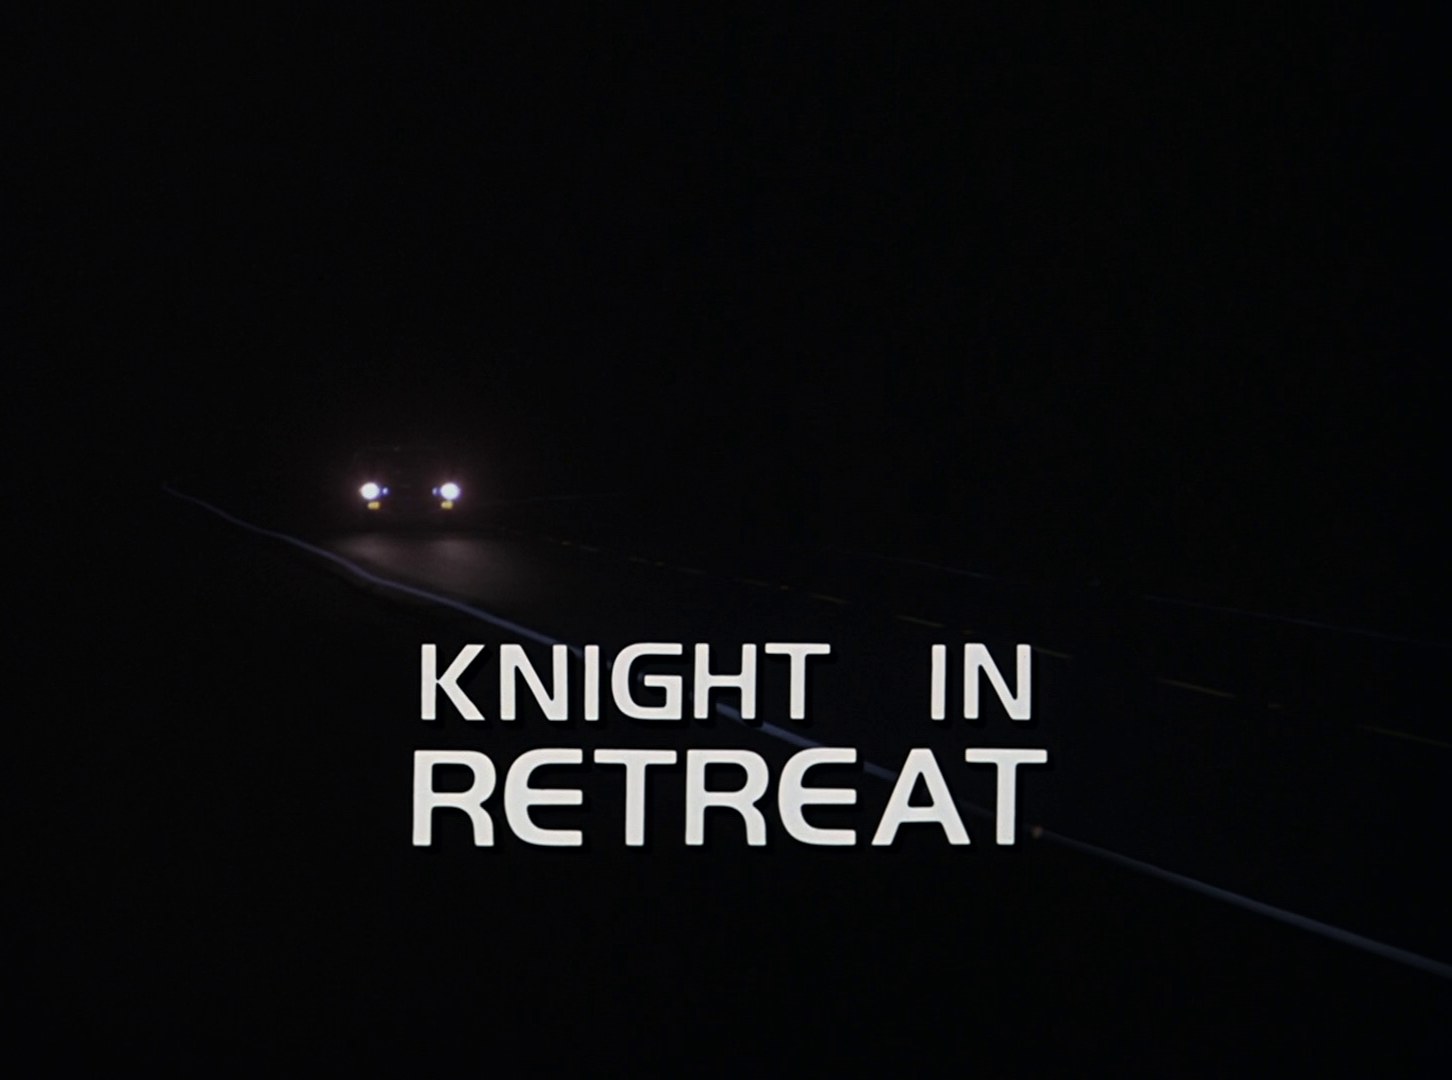 Knight Rider Season 3 - Episode 61 - Knight In Retreat - Photo 1